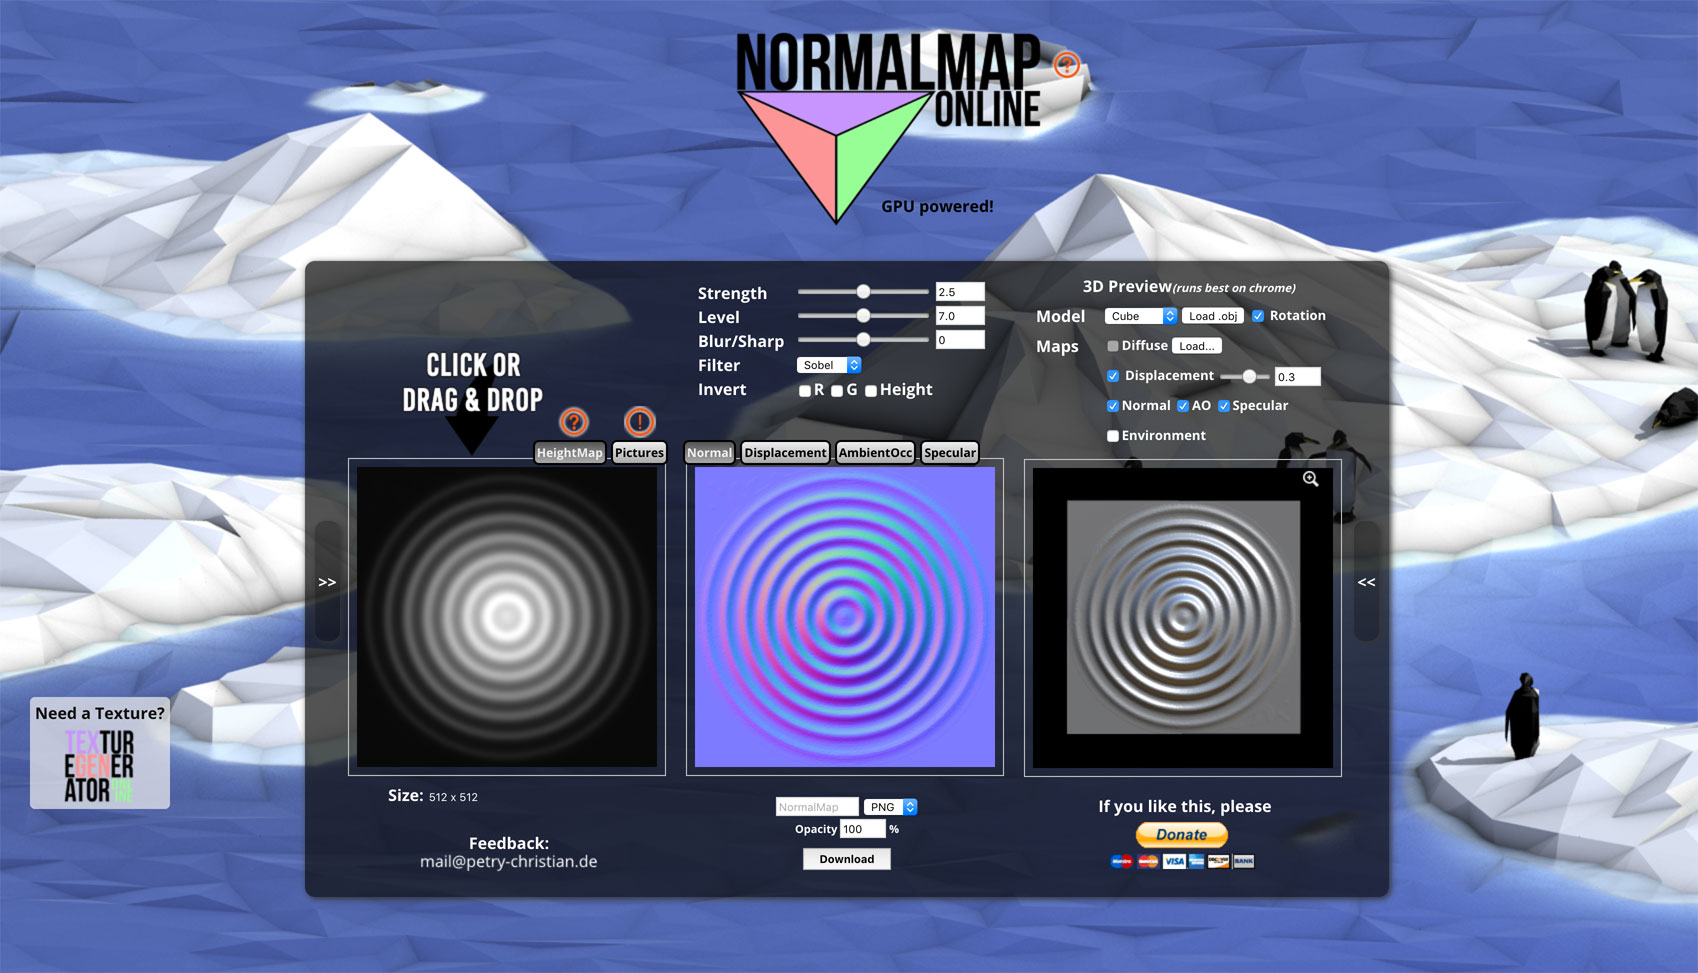 a Normalmap for Normalmapmakers